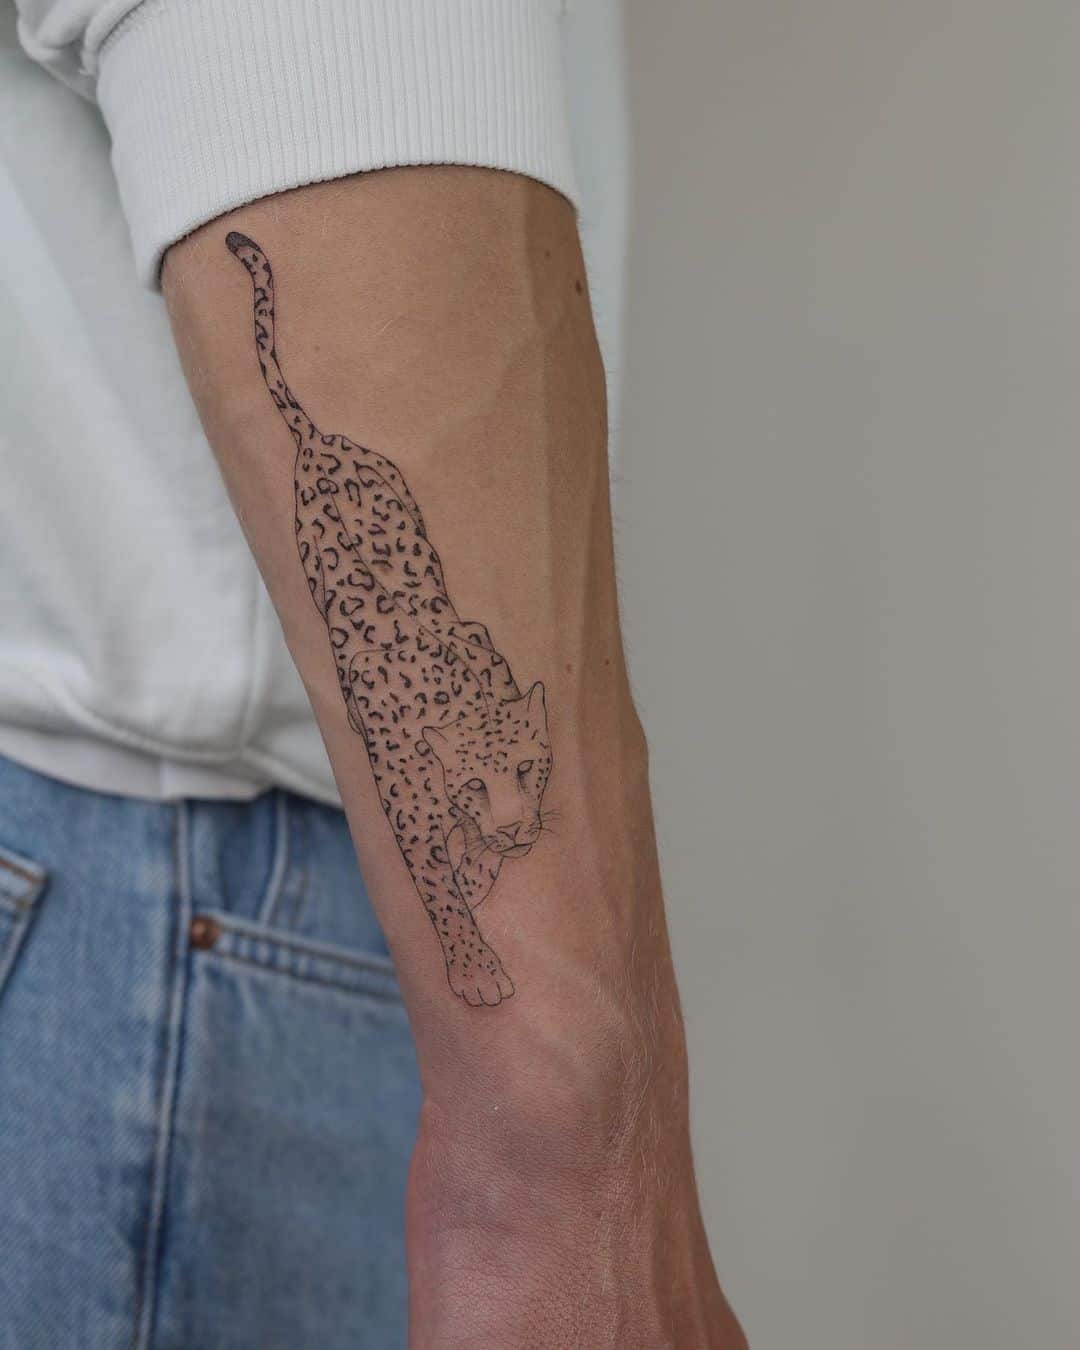 Amazing tattoo design on arm for women by akkurat tattoo